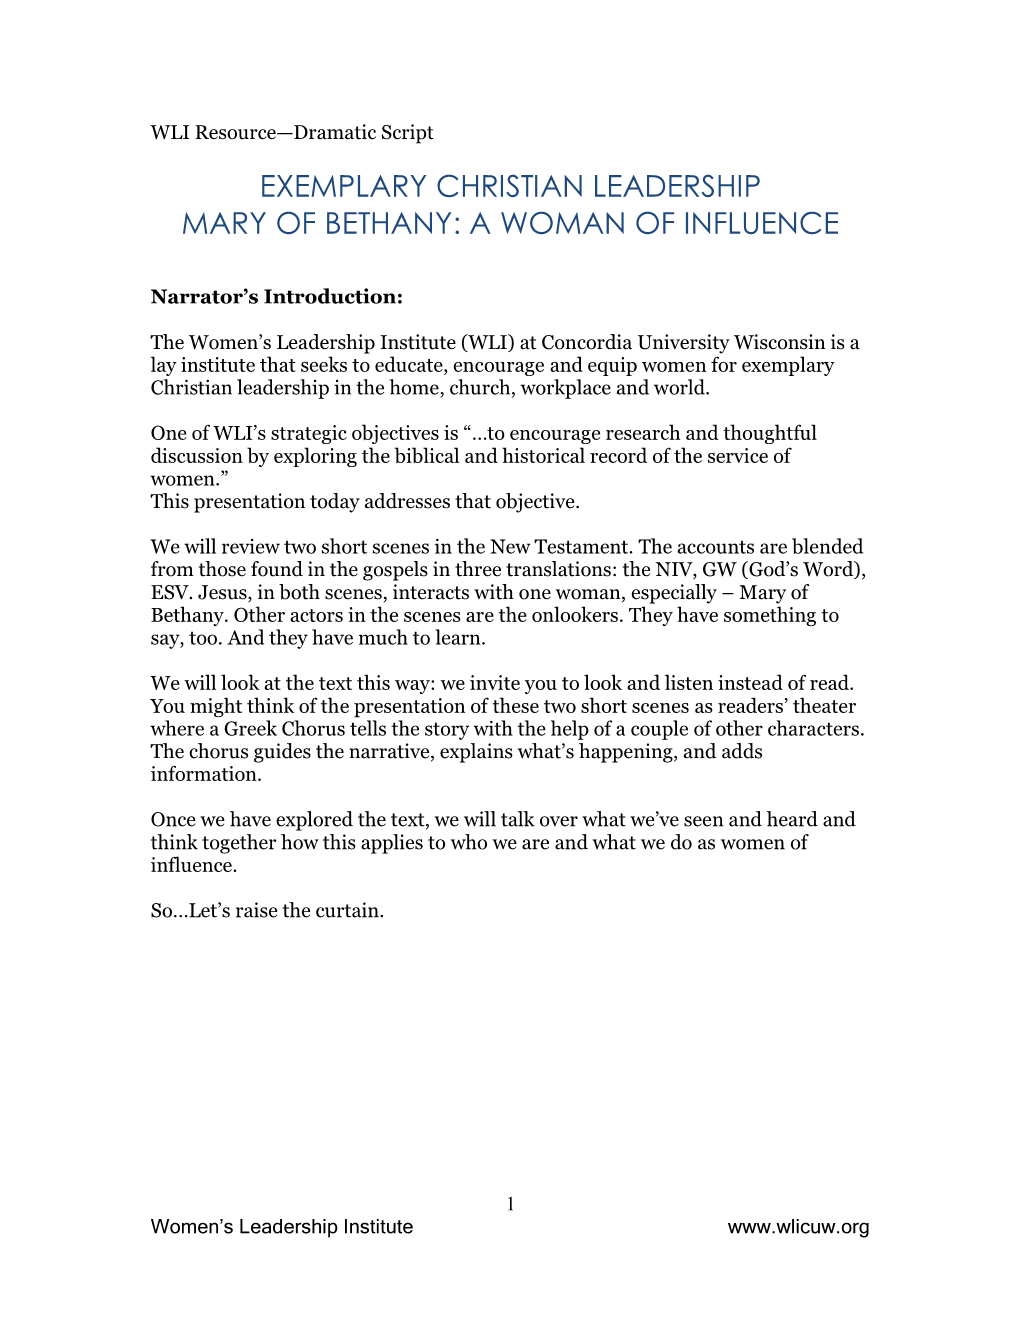 Exemplary Christian Leadership Mary of Bethany: a Woman of Influence